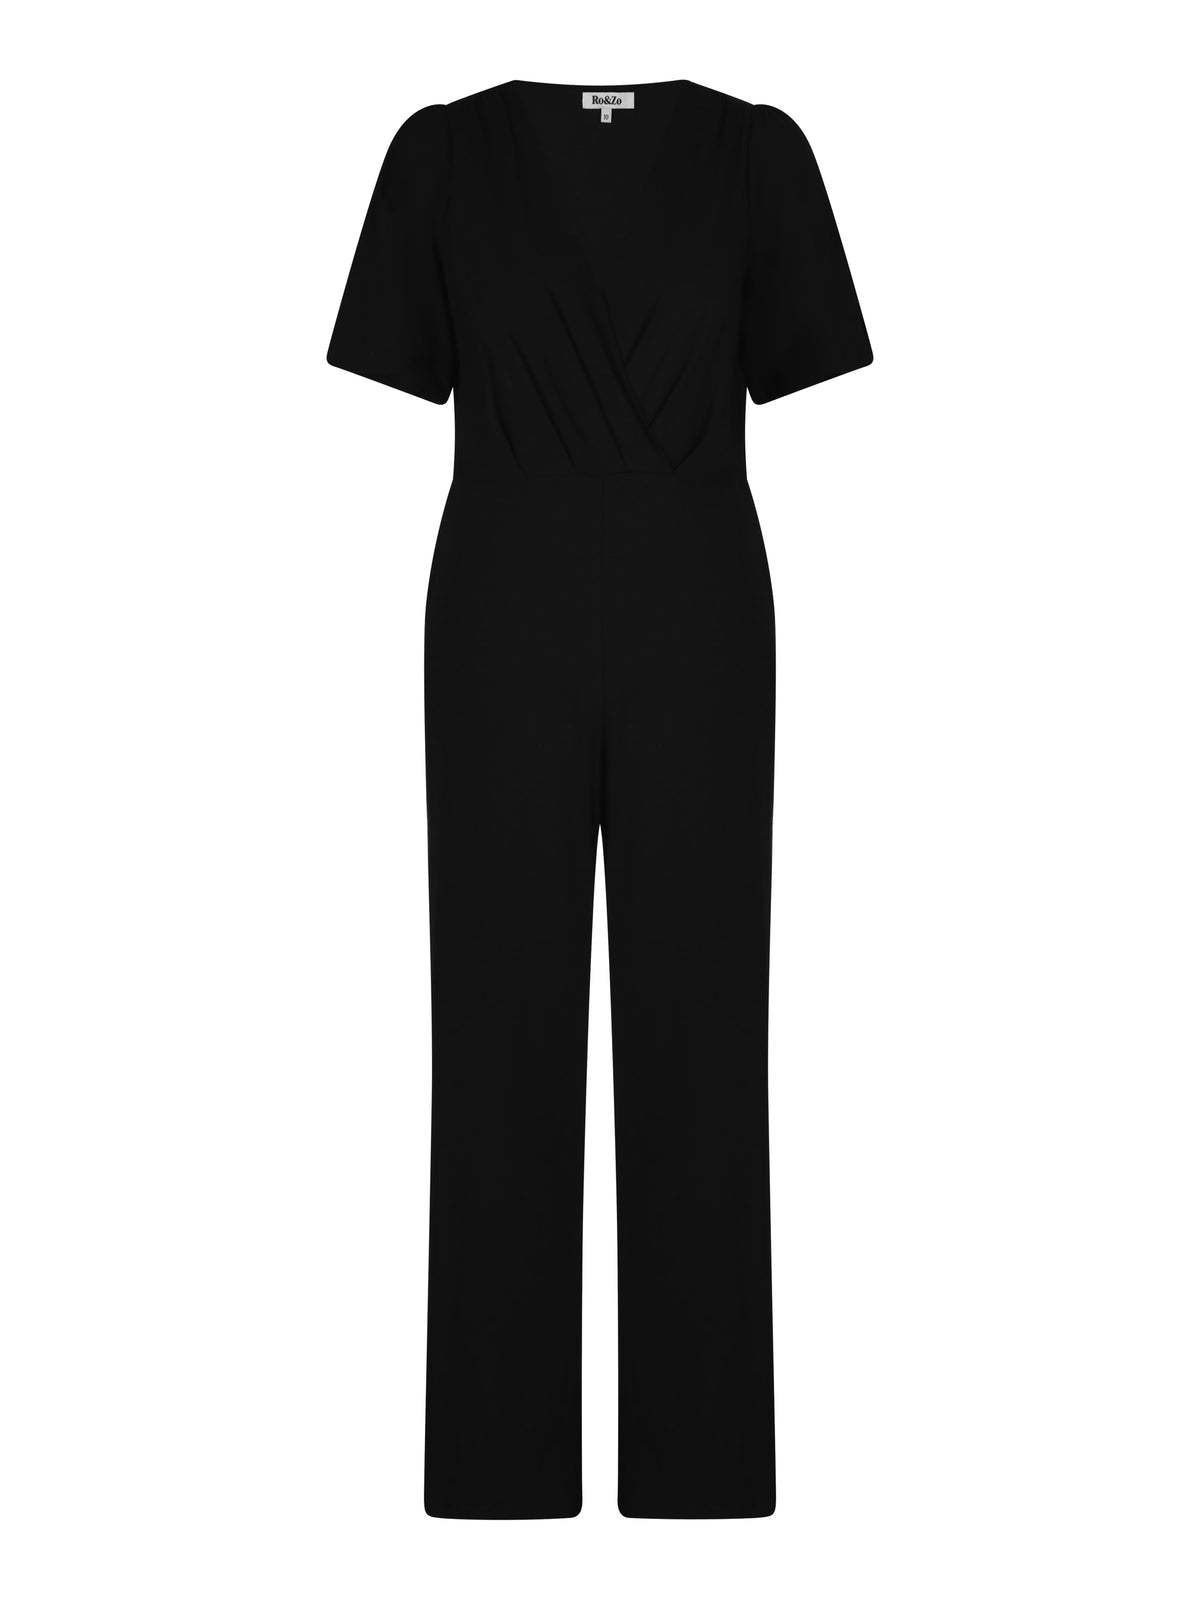 Petite Black Jersey Wrap Jumpsuit